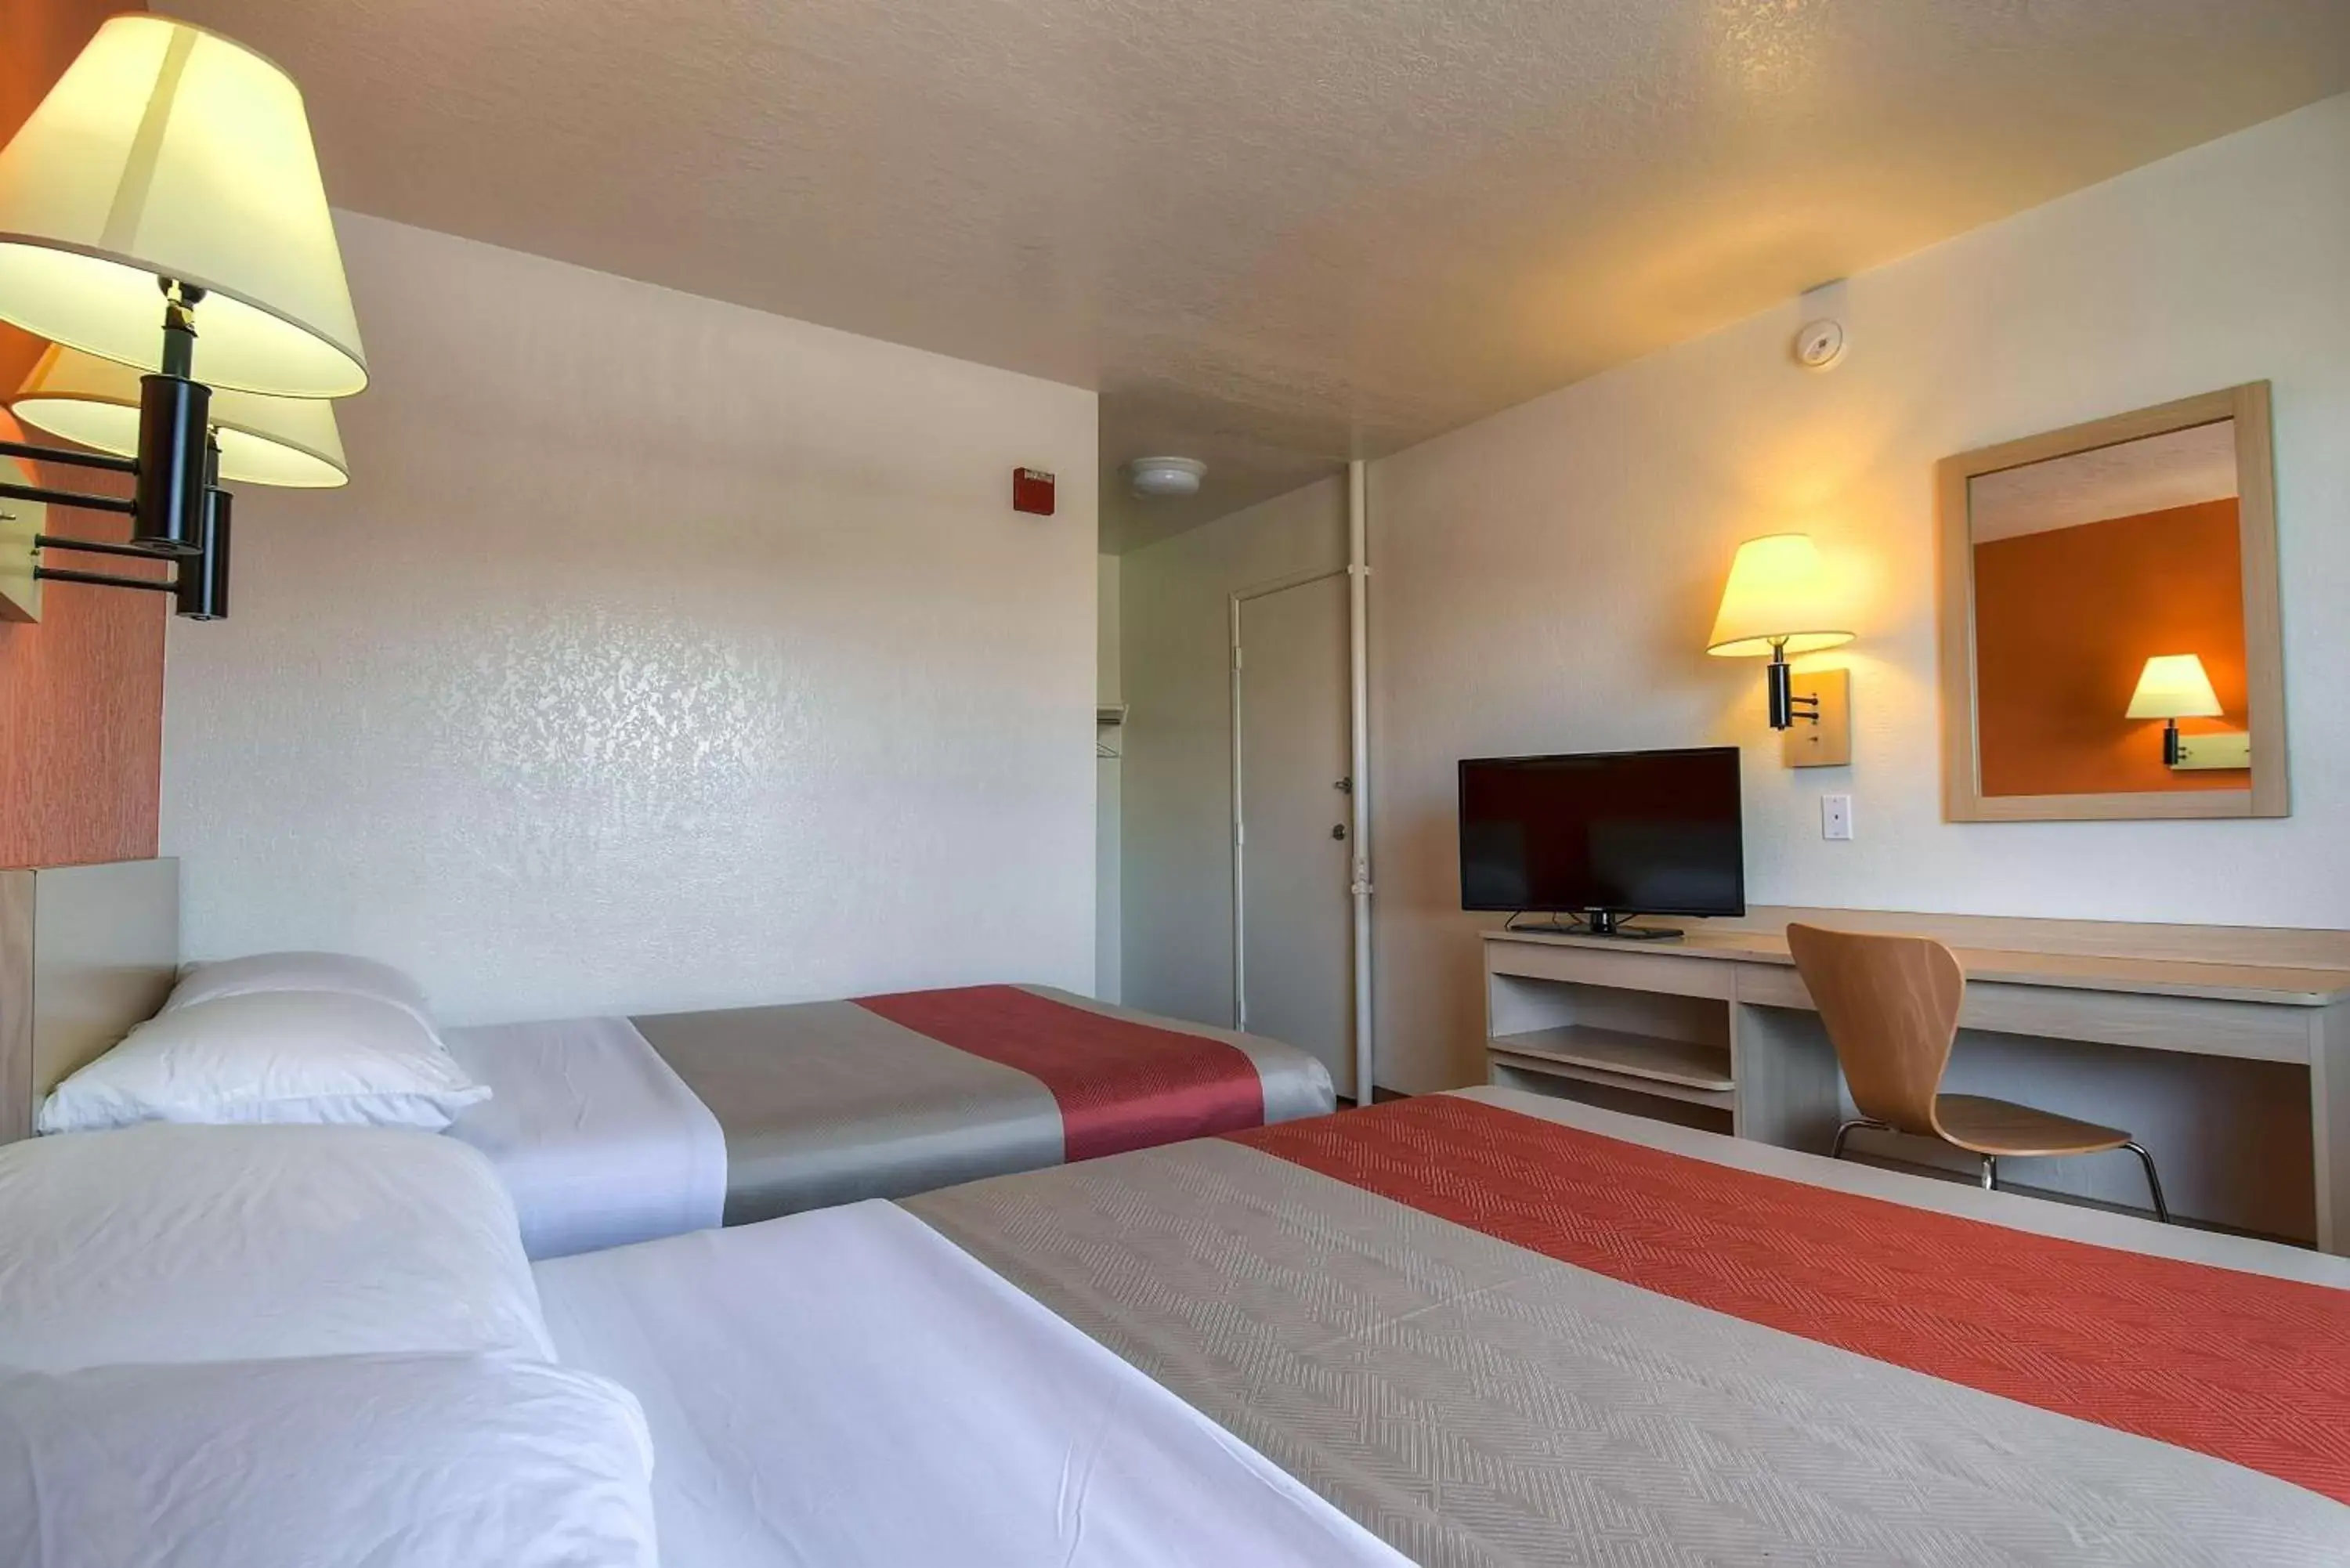 TV and multimedia, Room Photo in Motel 6-Stanton, CA